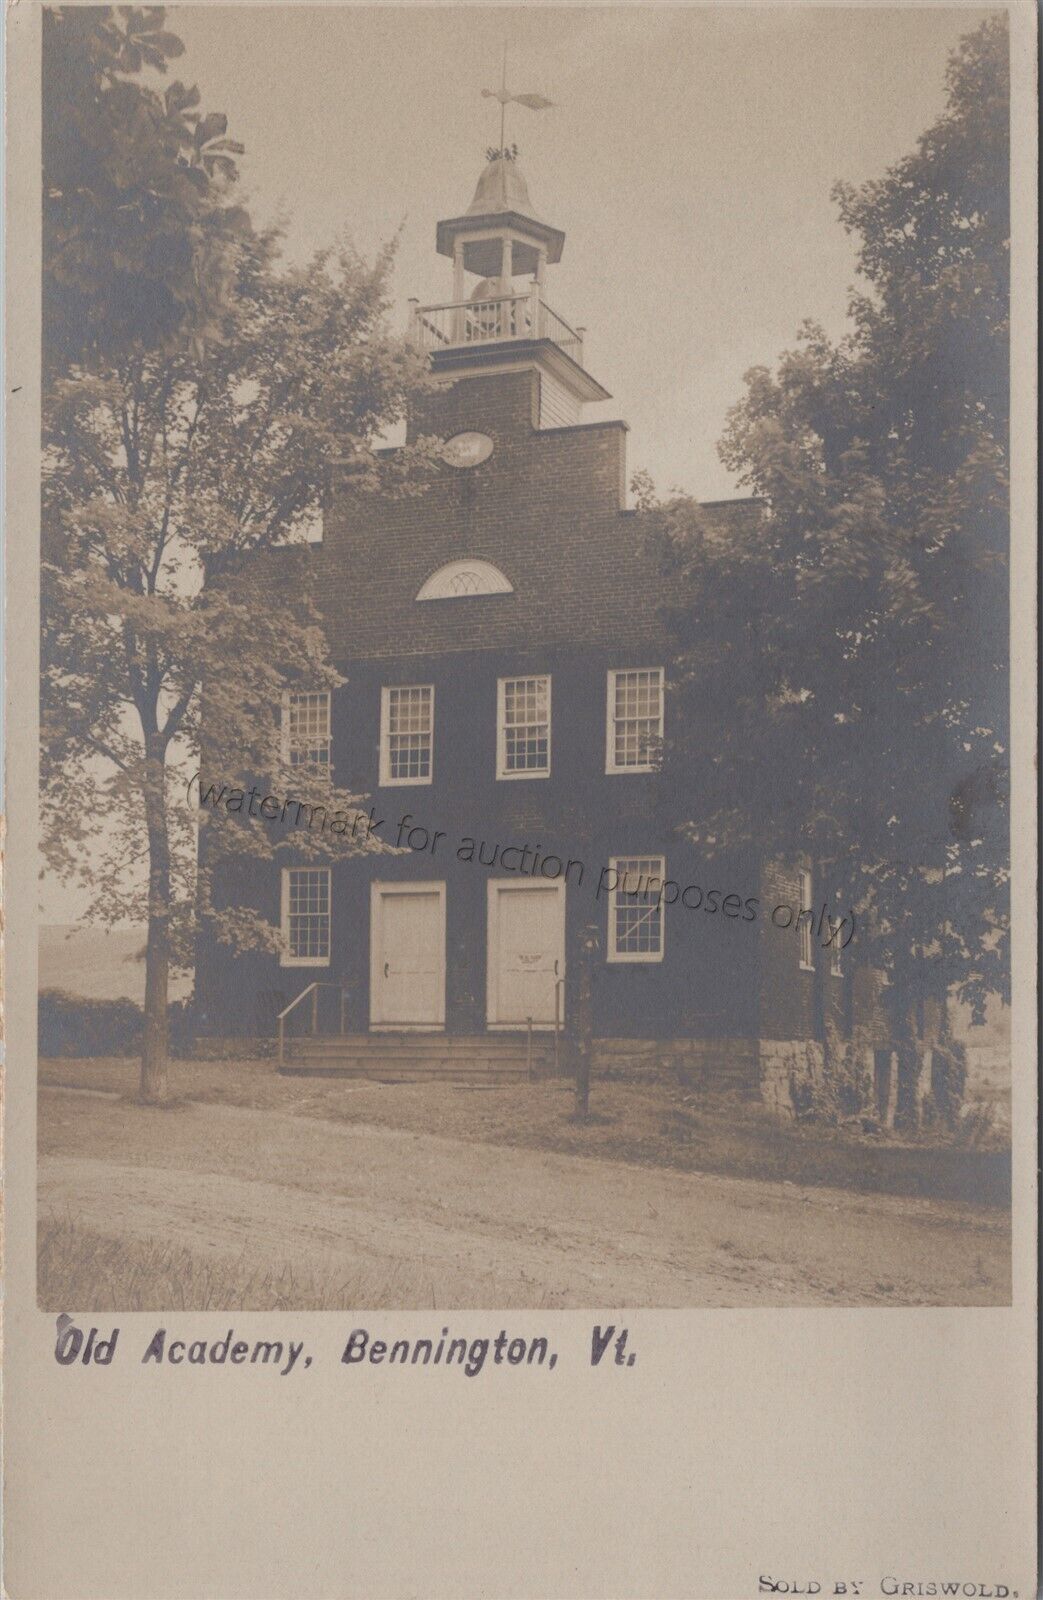 Bennington, VT: RPPC Old Academy, vintage Vermont Real Photo Postcard